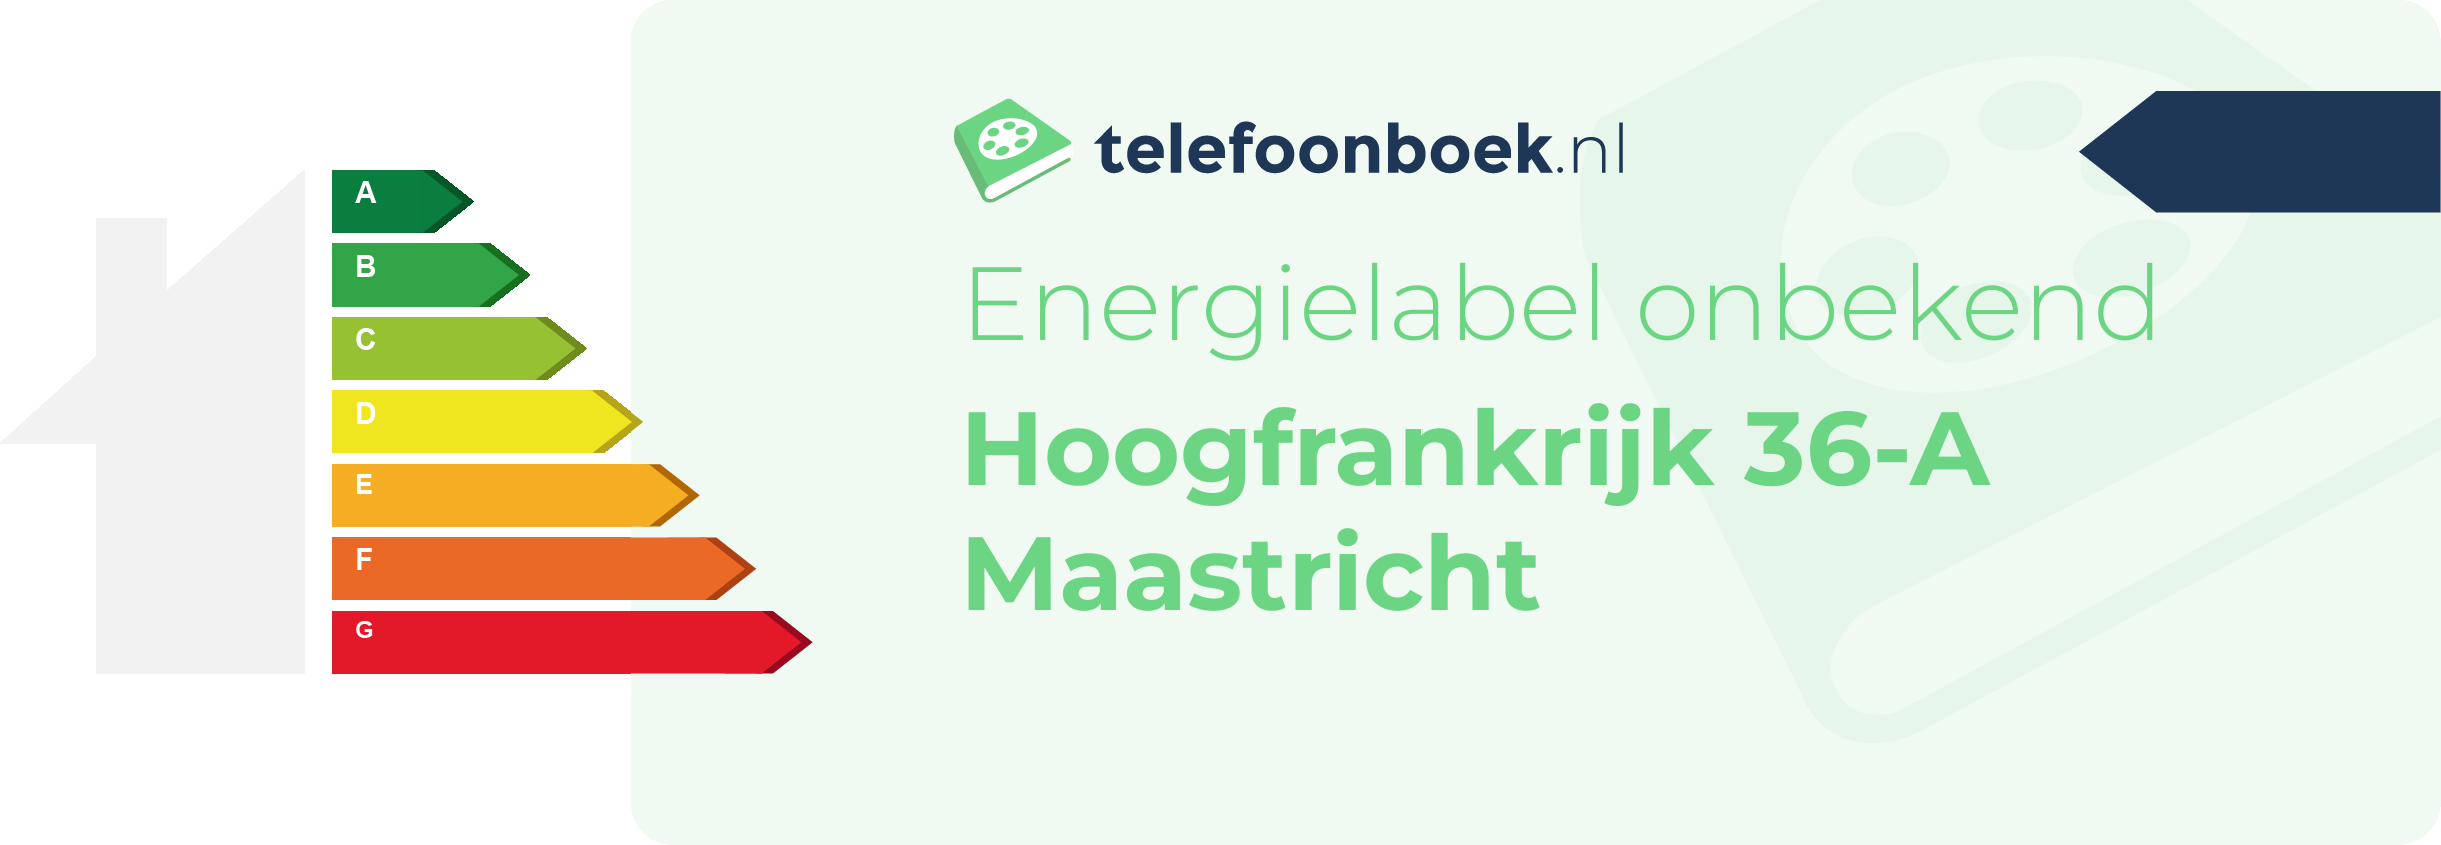 Energielabel Hoogfrankrijk 36-A Maastricht